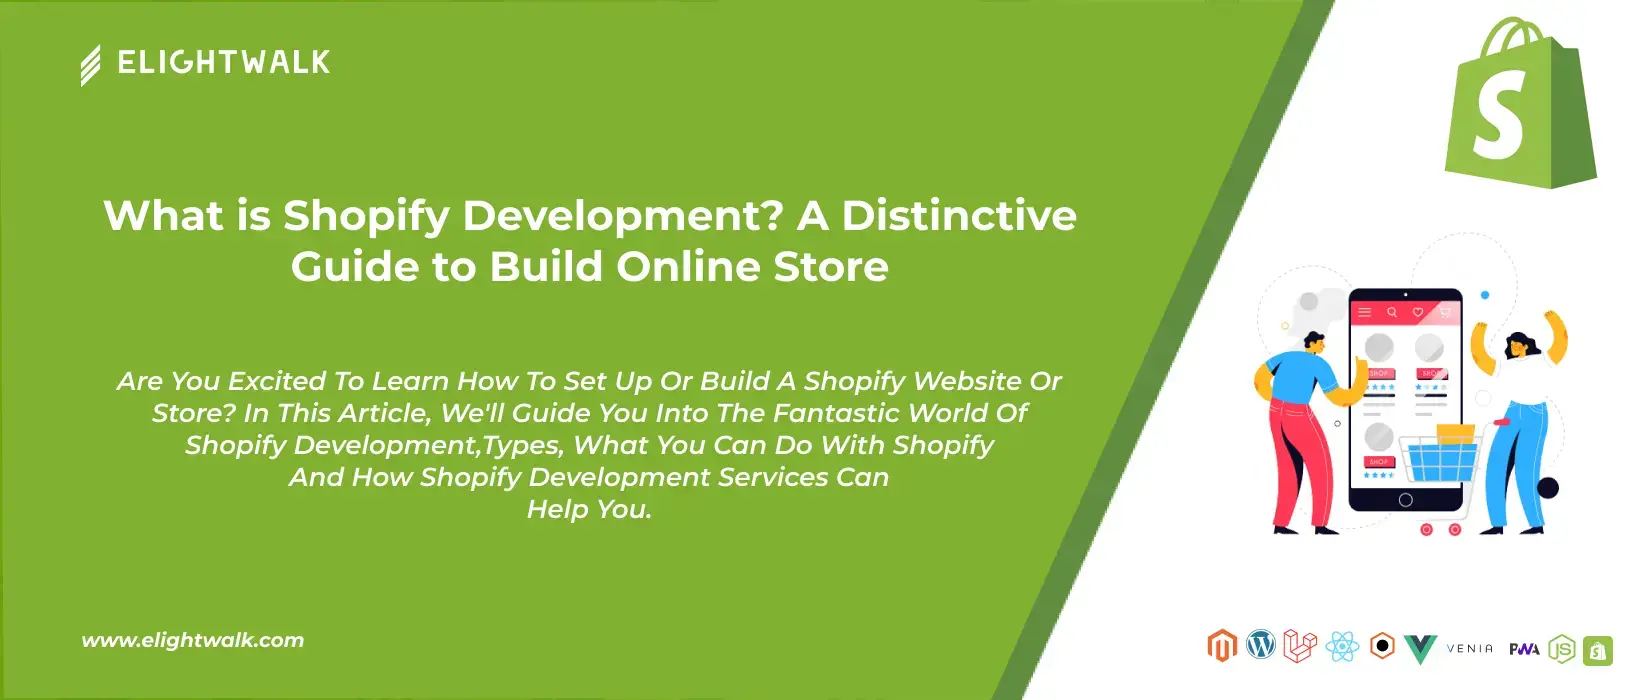 shopify development a distinctive guide